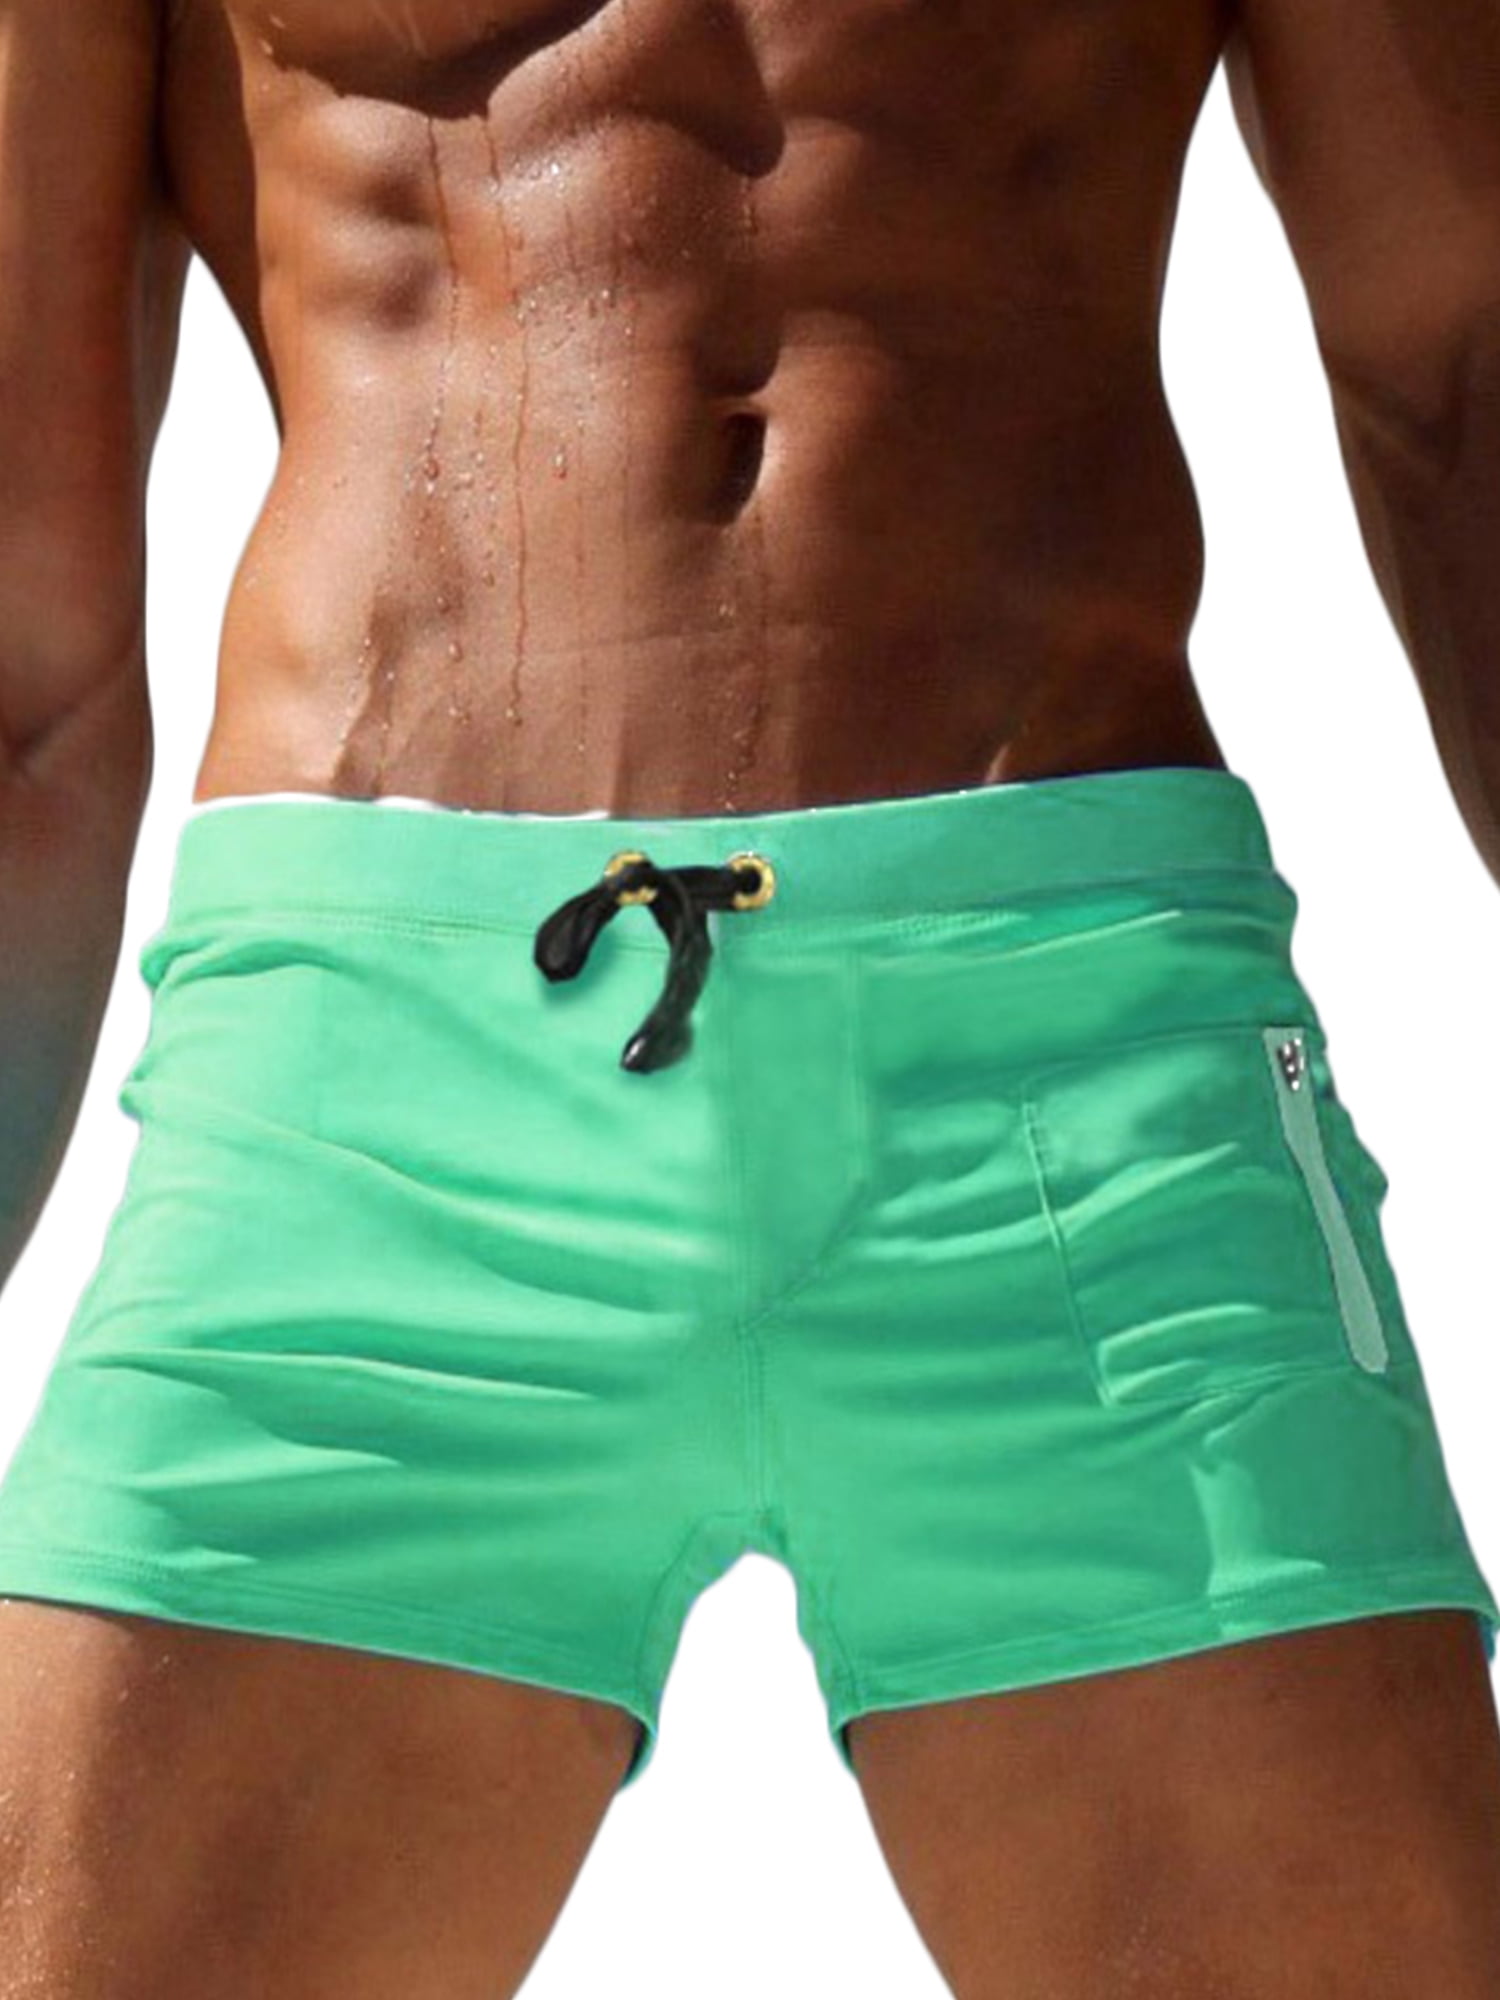 Details about   Men's Swimming Trunks Fitness Shorts Boxer Brief Swimwear Shorts underwear M-XL 